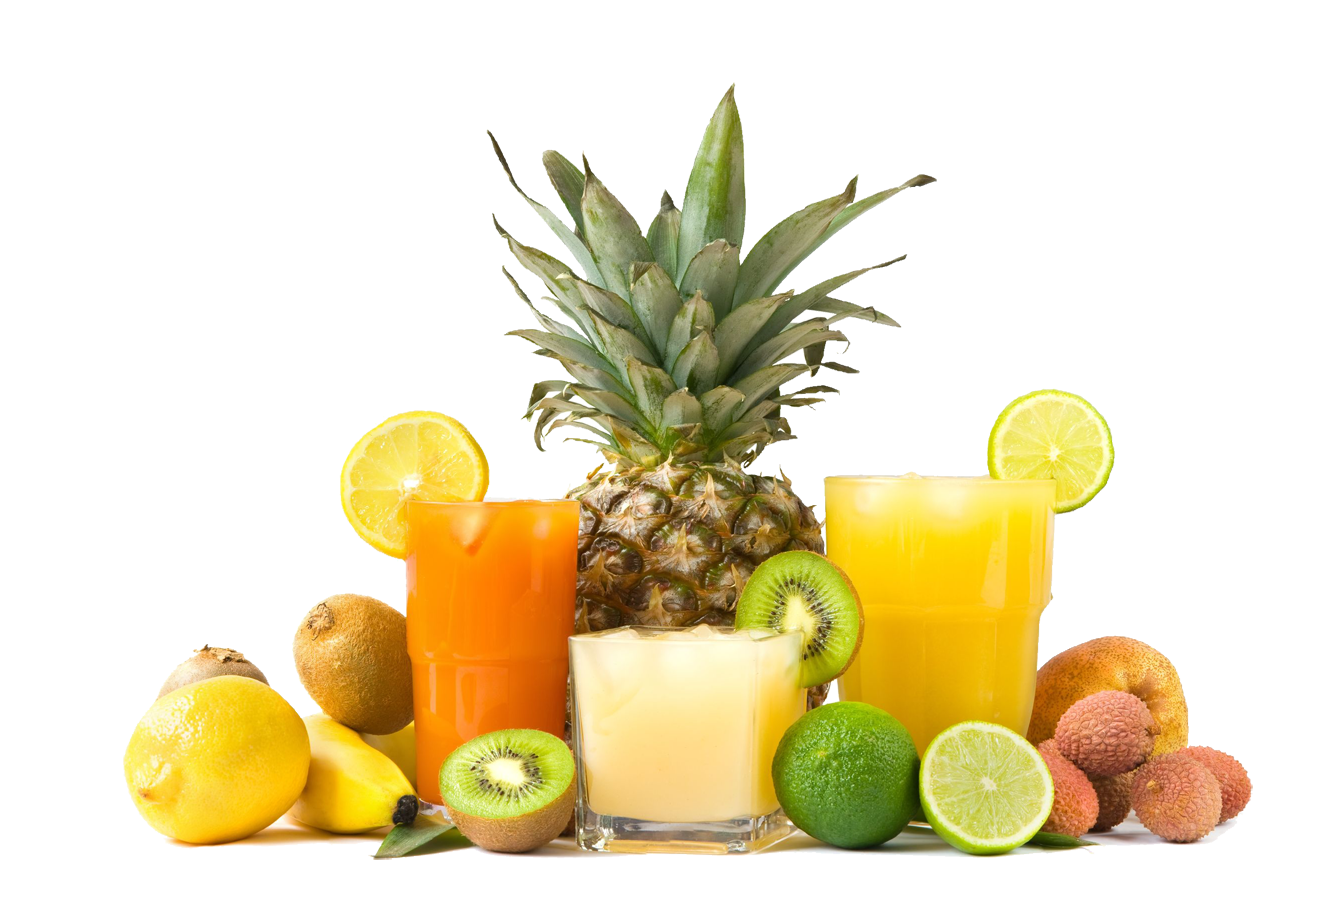 Tropical Fruit Juice PNG Image in Transparent pngteam.com